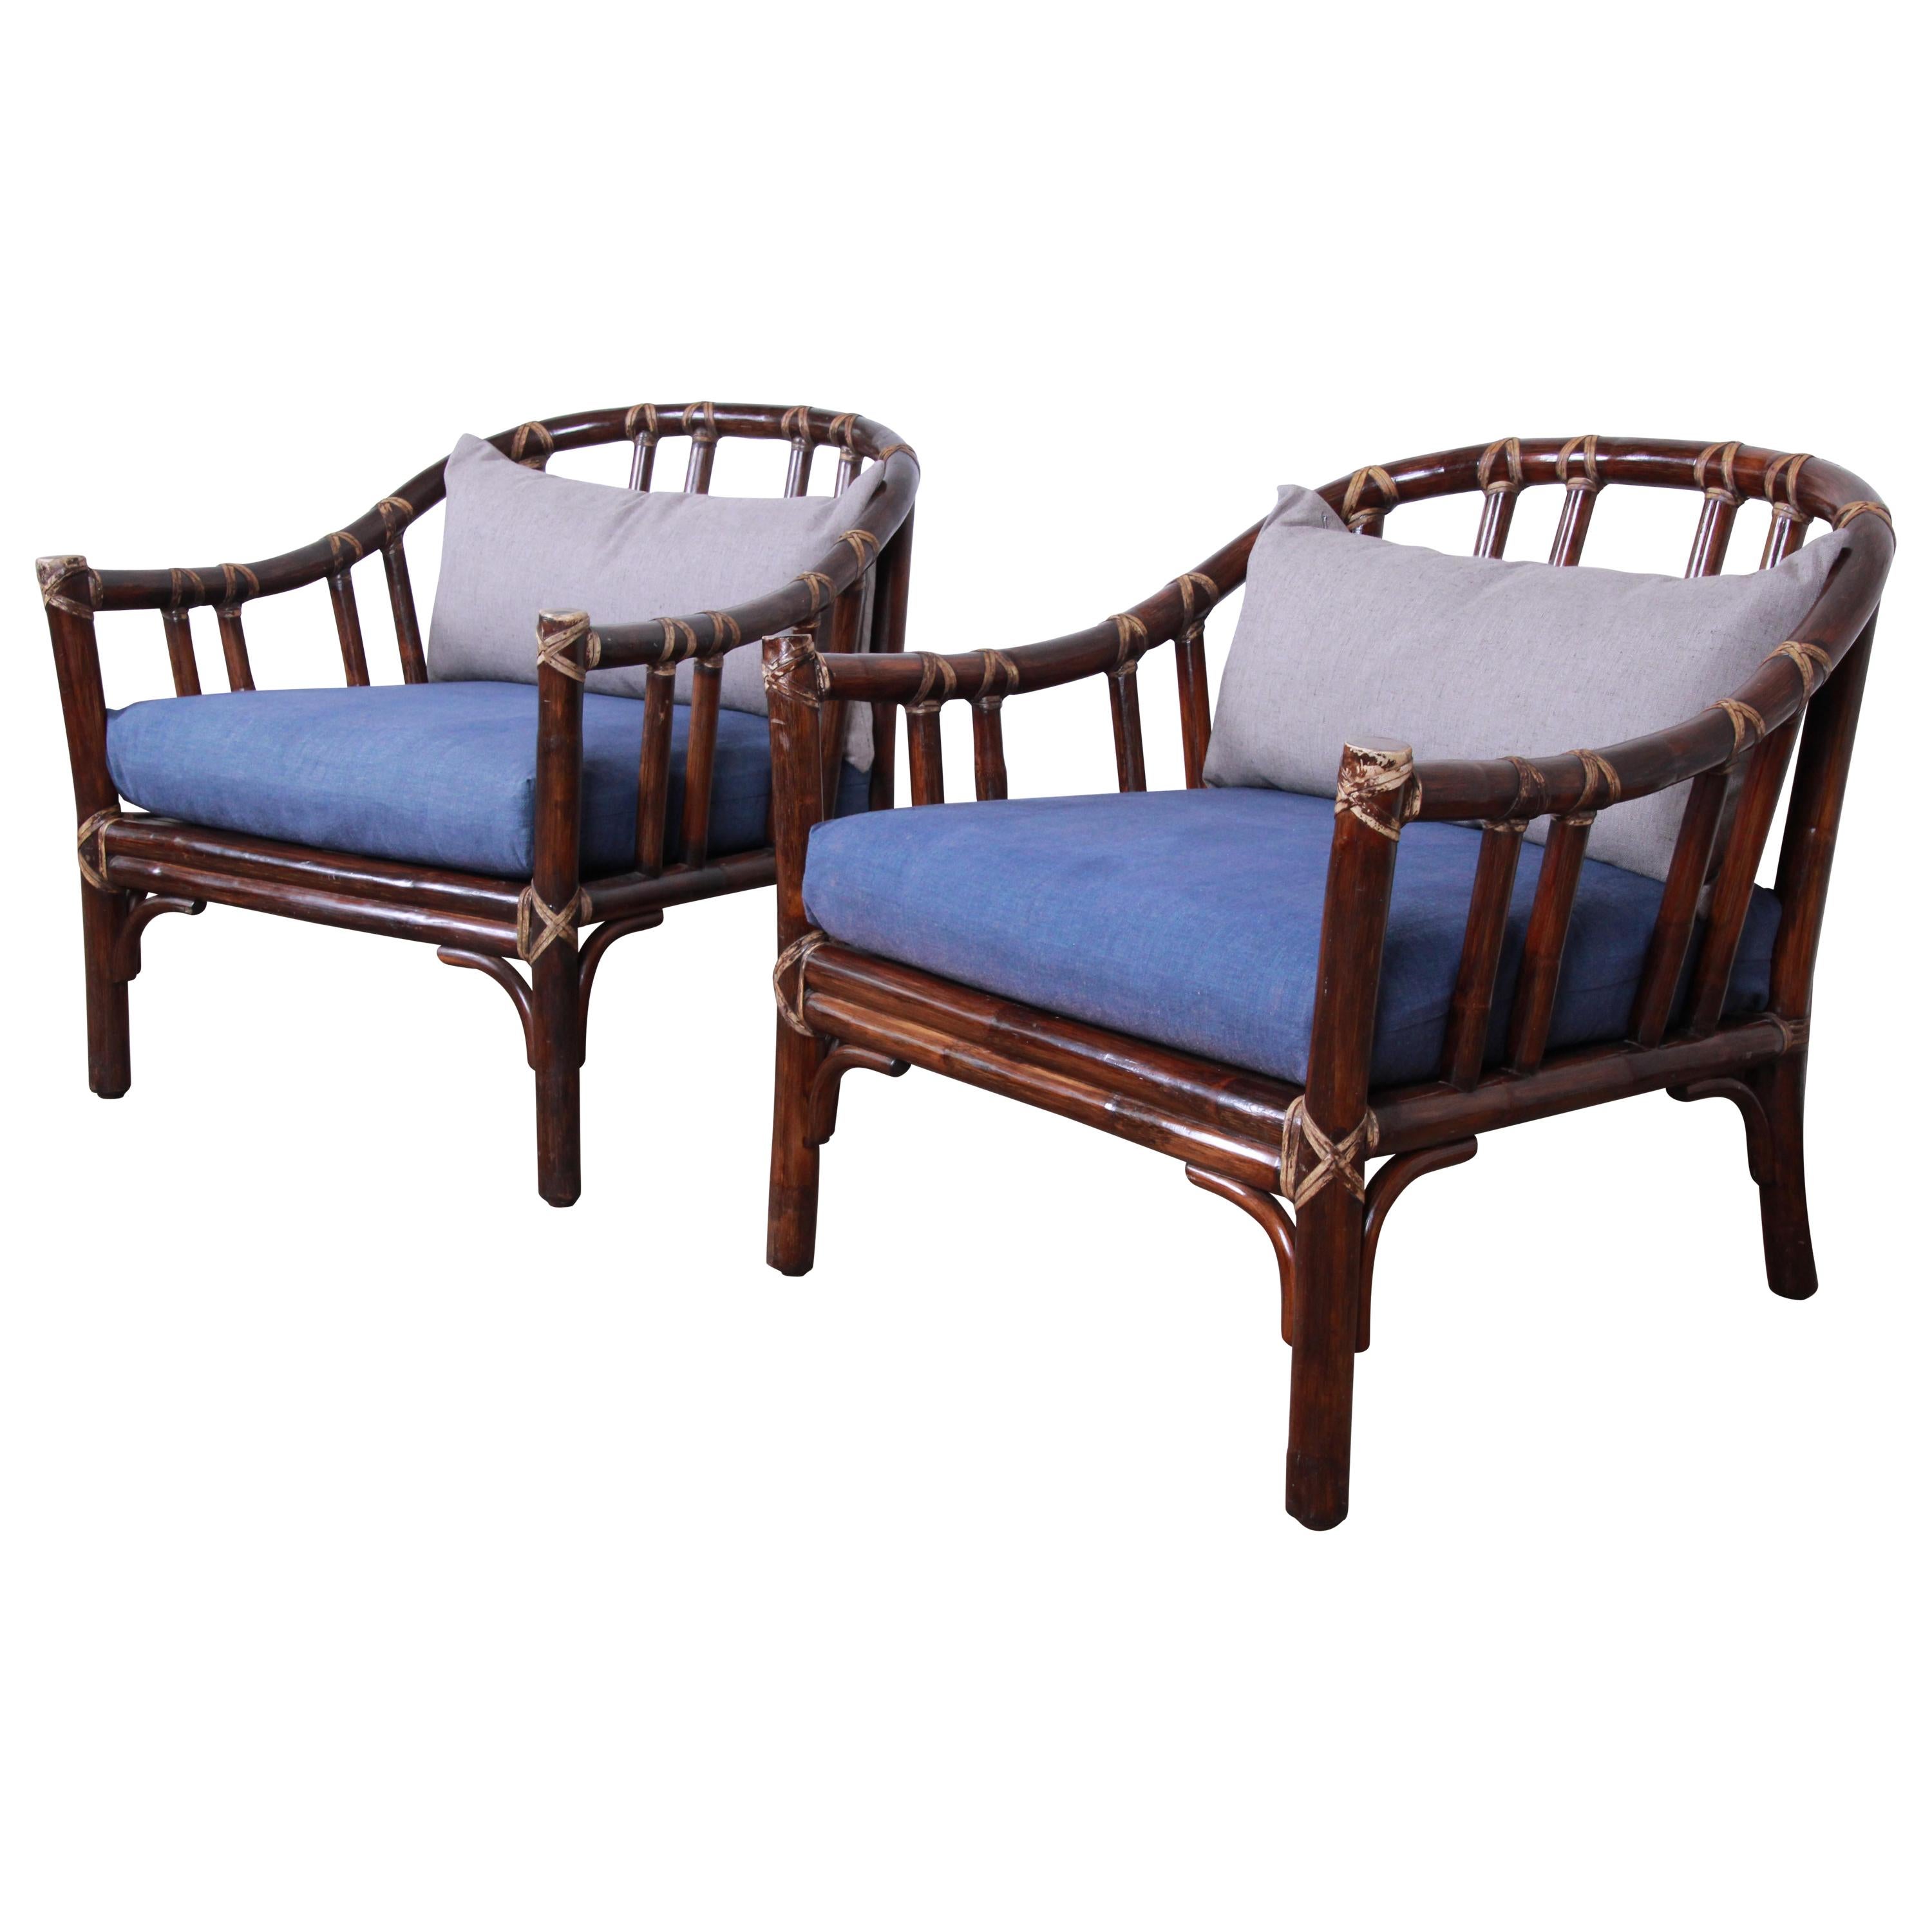 McGuire Hollywood Regency Mid-Century Modern Bent Rattan Lounge Chairs, Pair